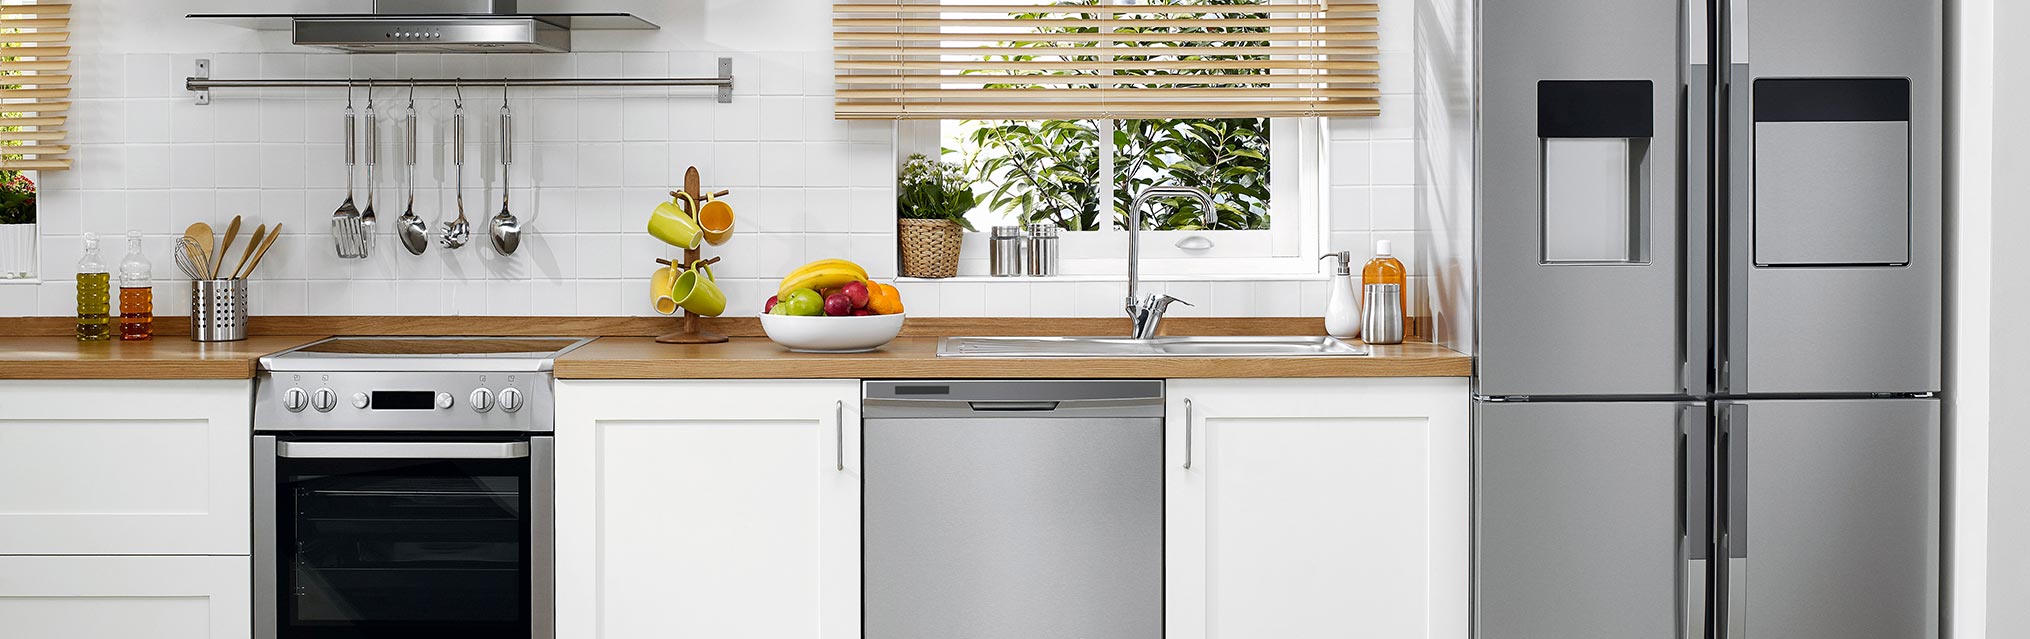 Energy saving tips for home appliances
